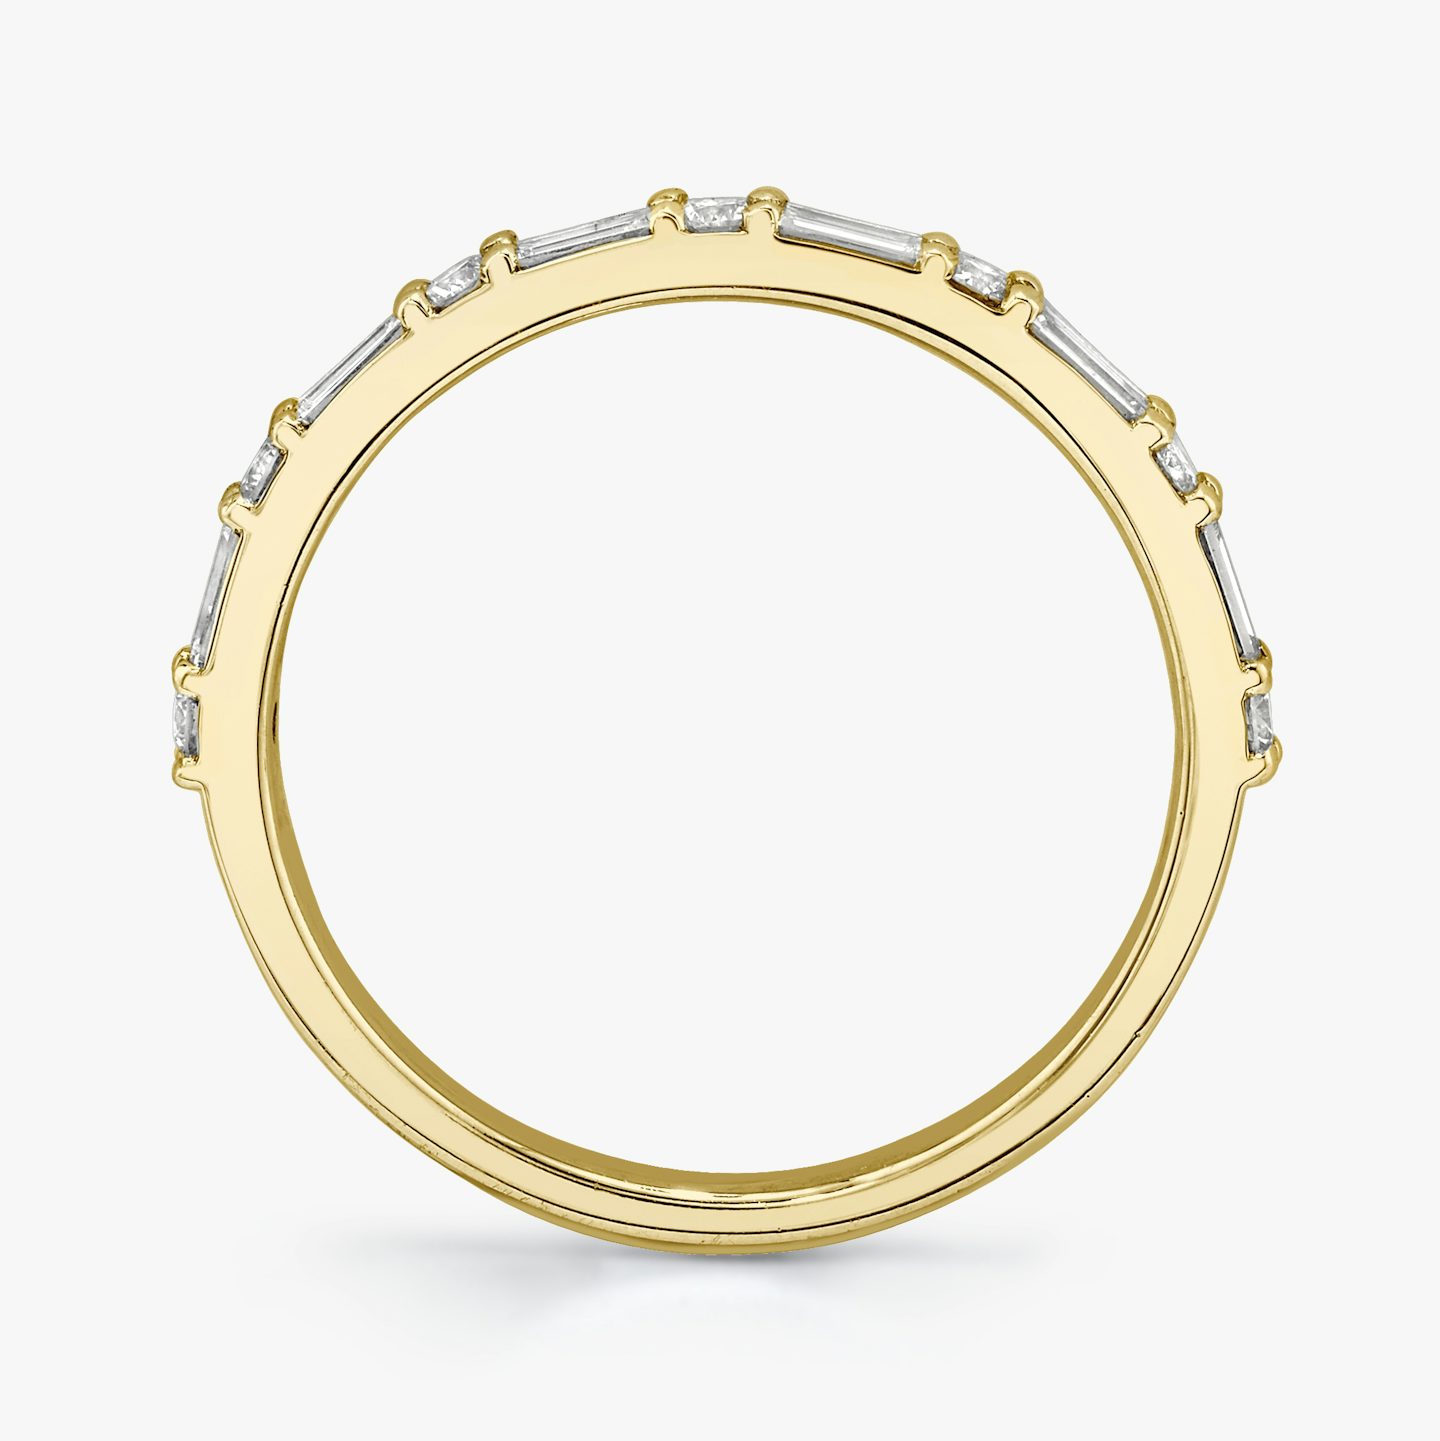 Alternating Shapes Ring | Rund | 18k | 18k Gelbgold | Ringstil: Halb besetzt